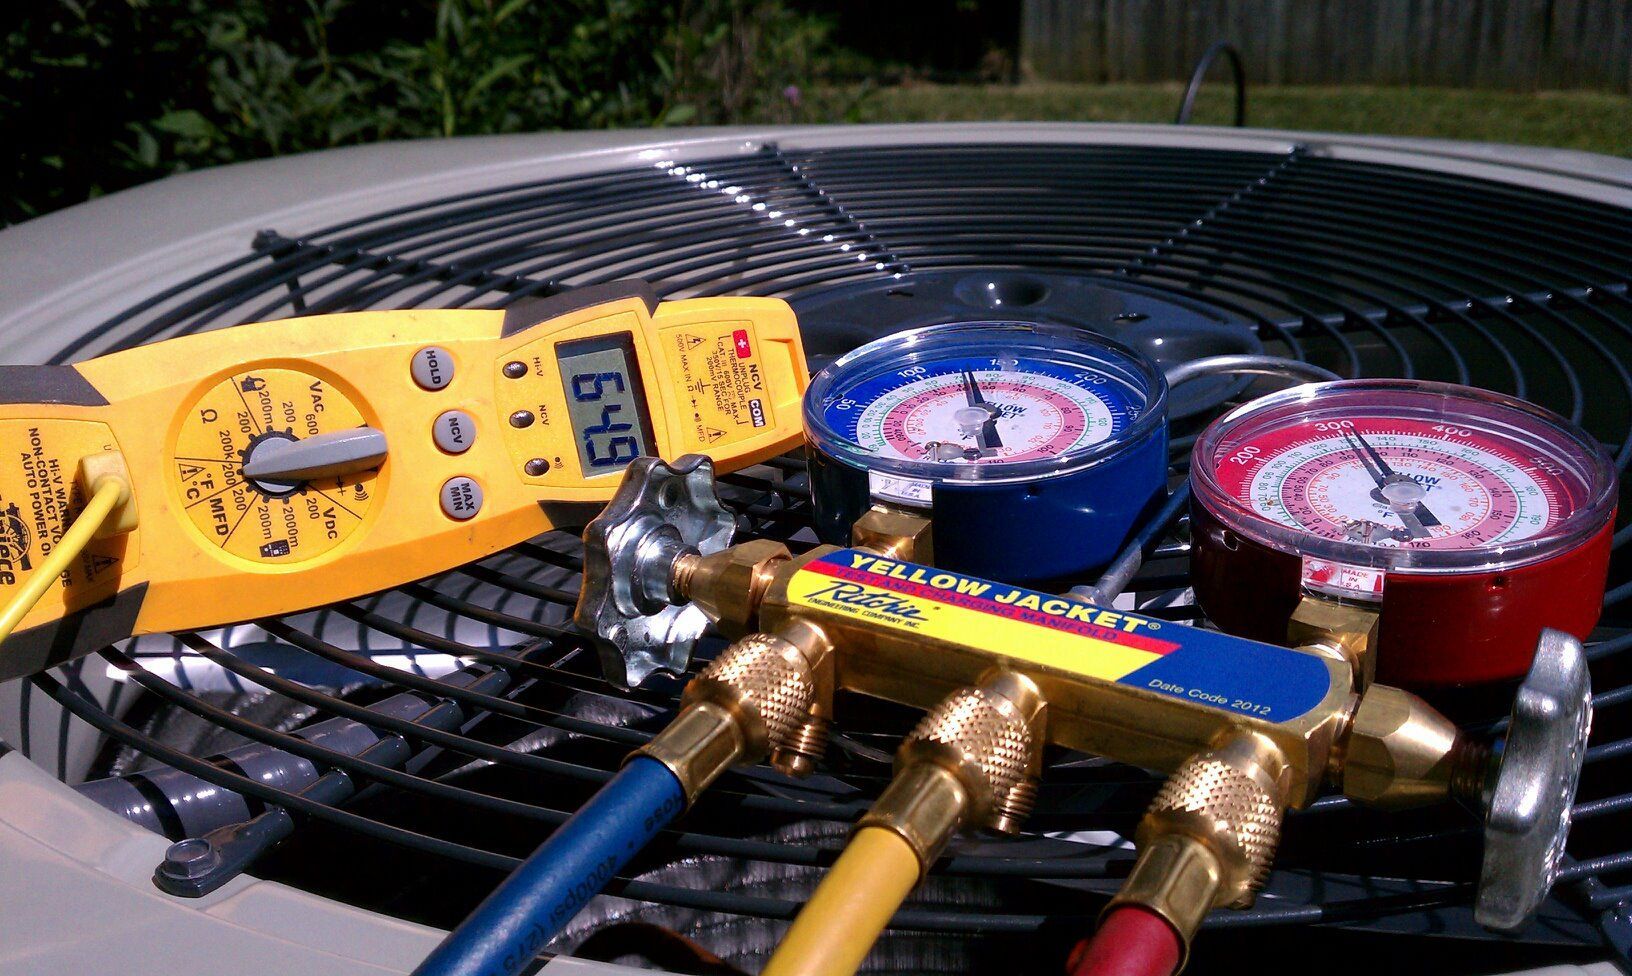 AC Gauges and Electrical Meter for AC Repair
